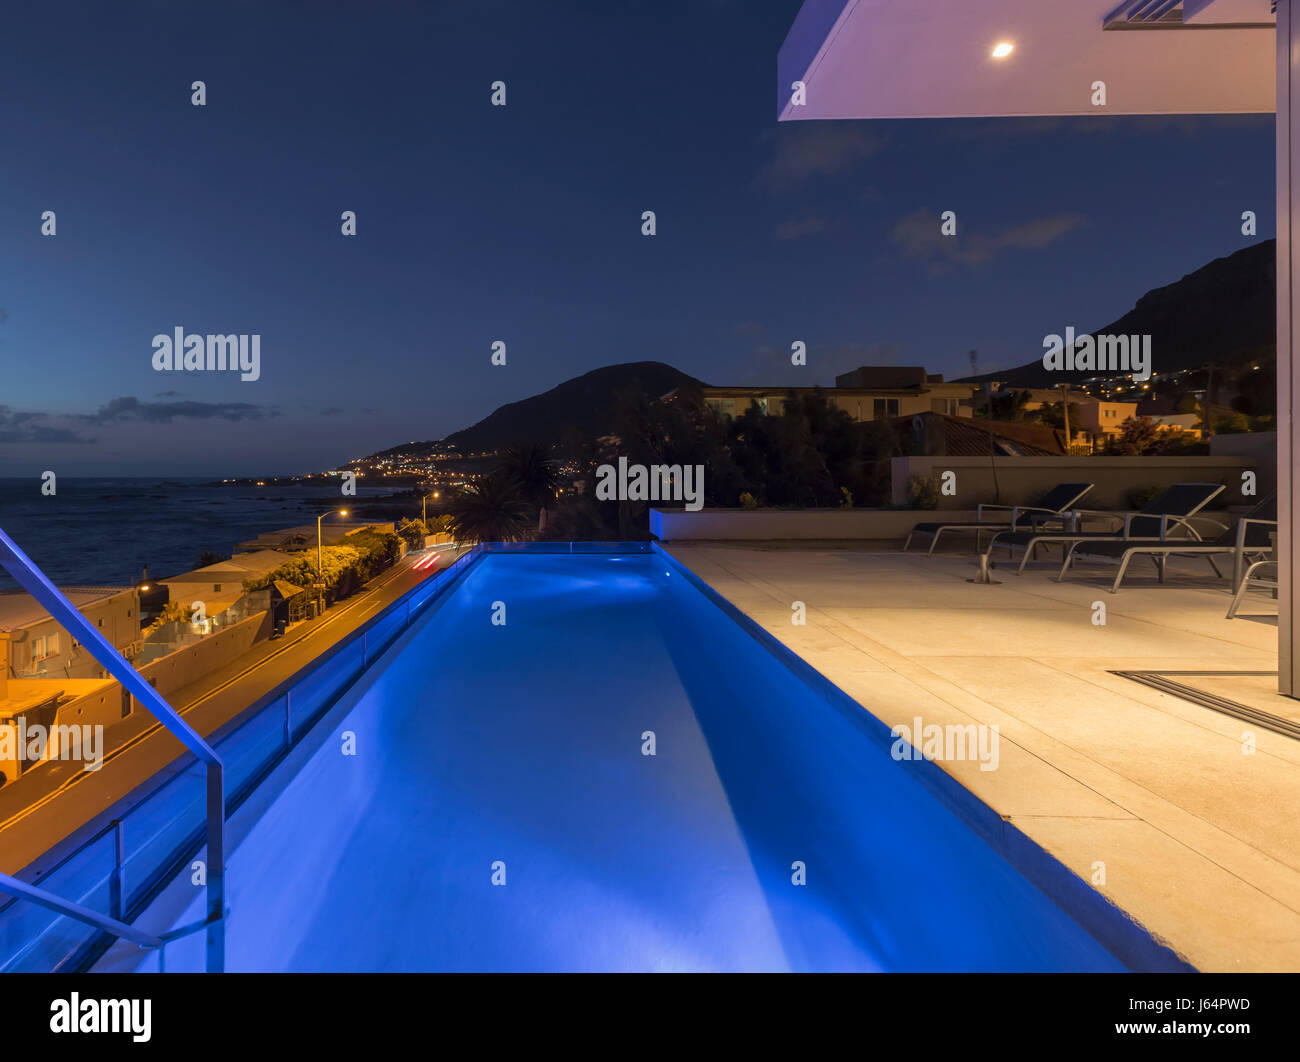 Illuminated blue lap swimming pool on luxury patio at night Stock Photo